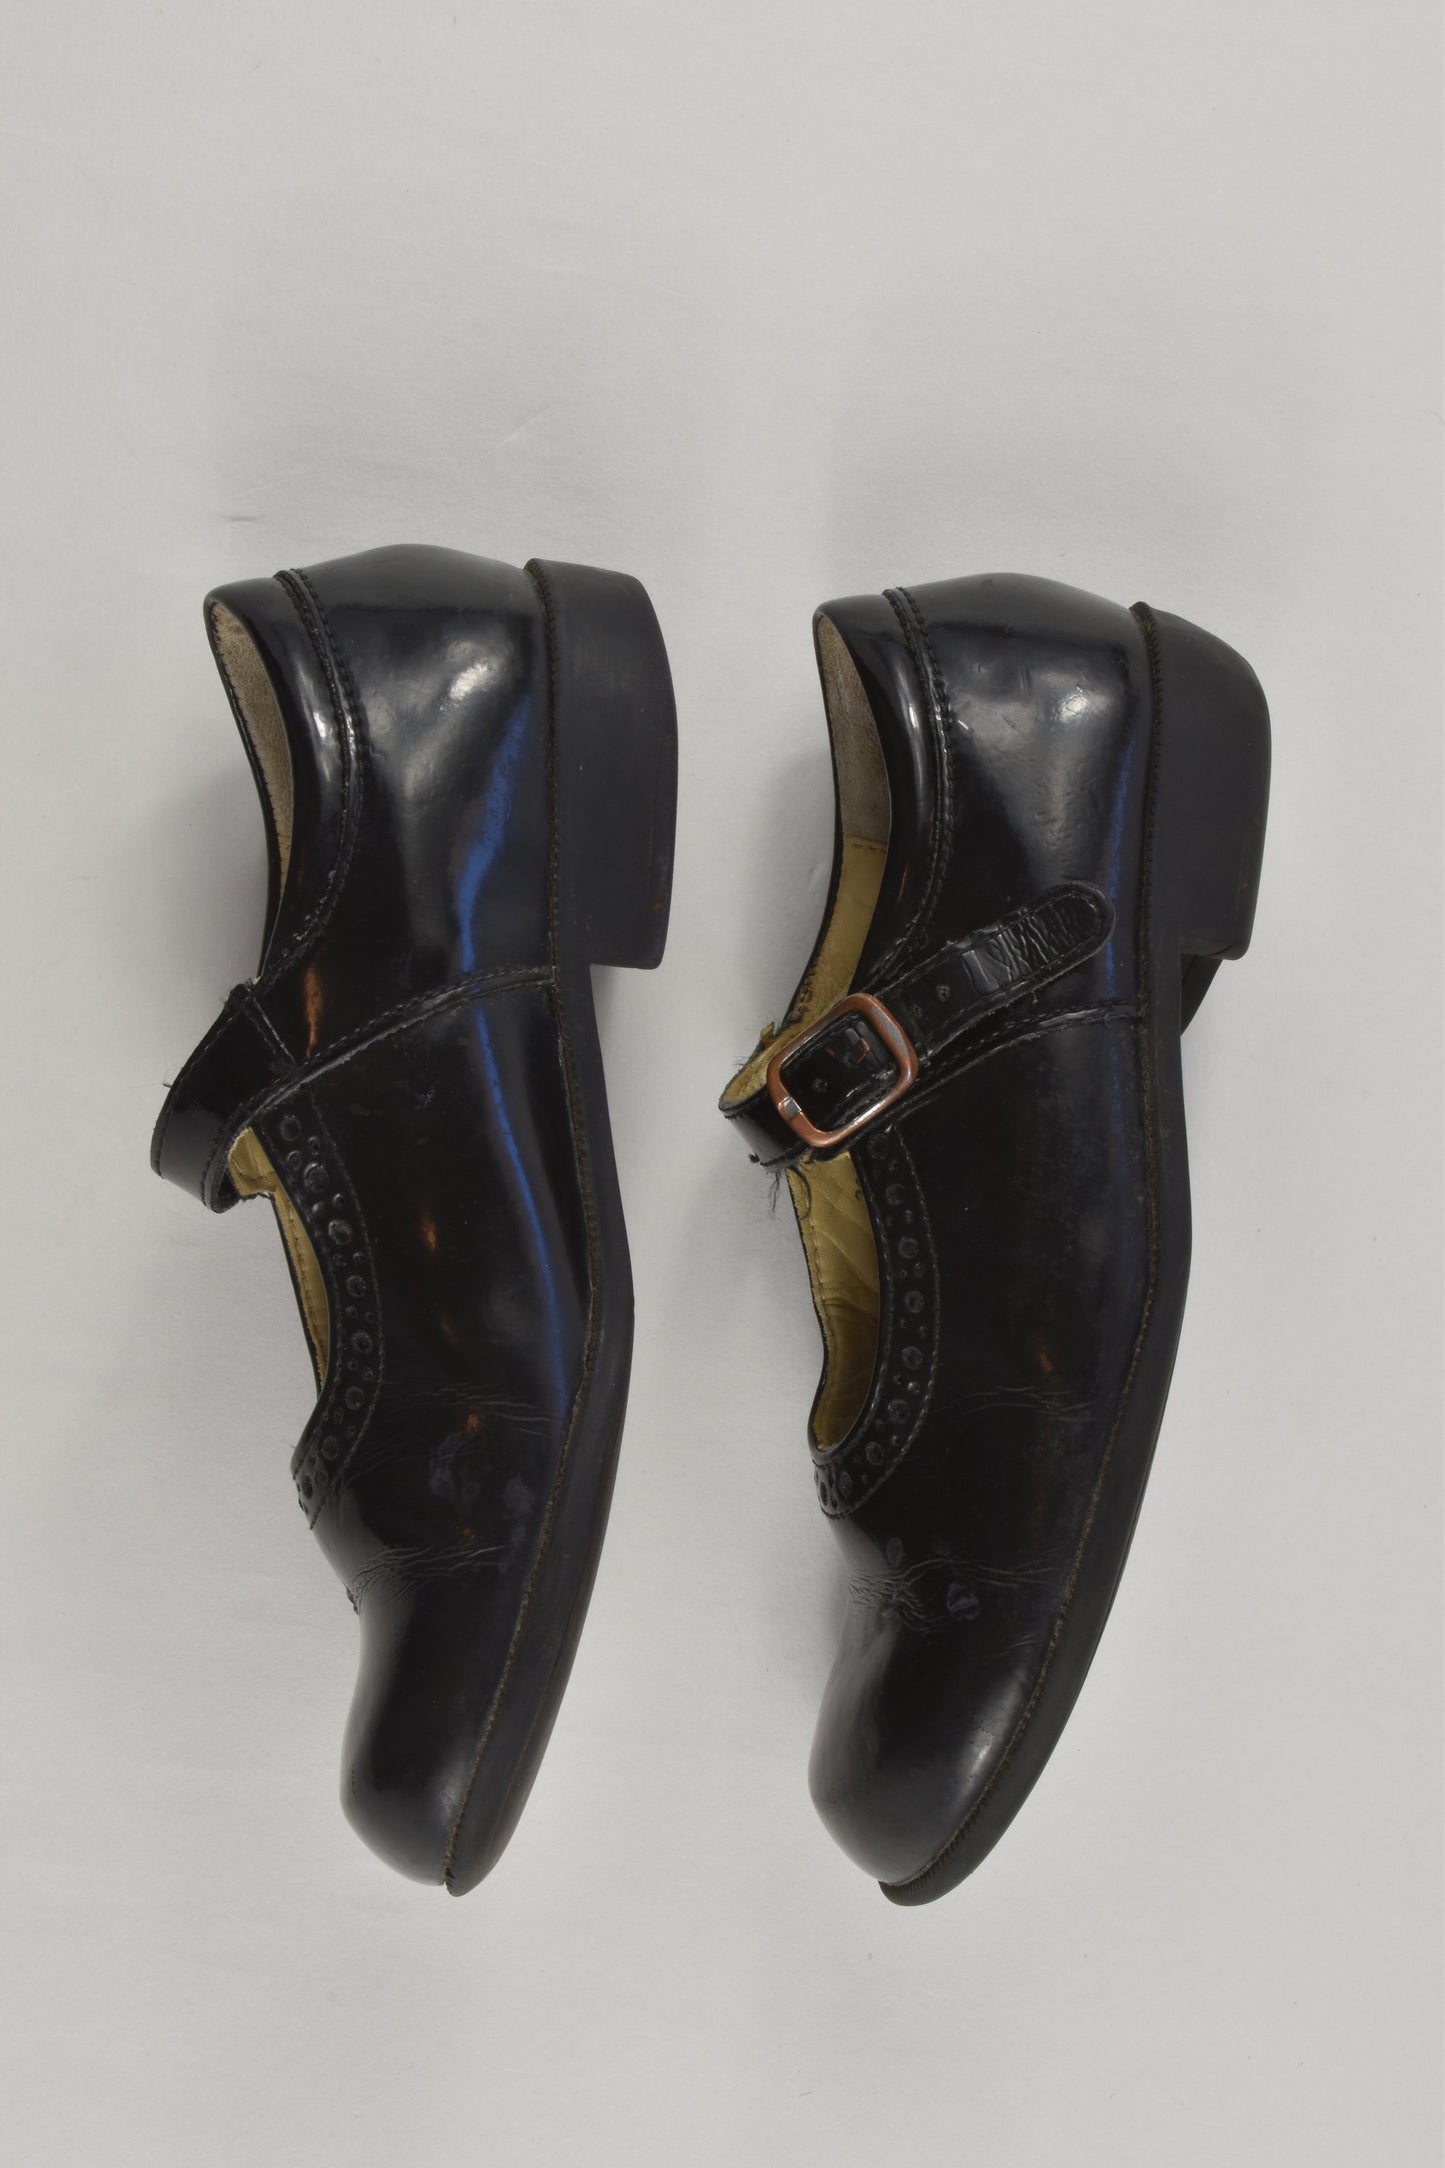 Start-rite England Size UK 10 Leather Shoes